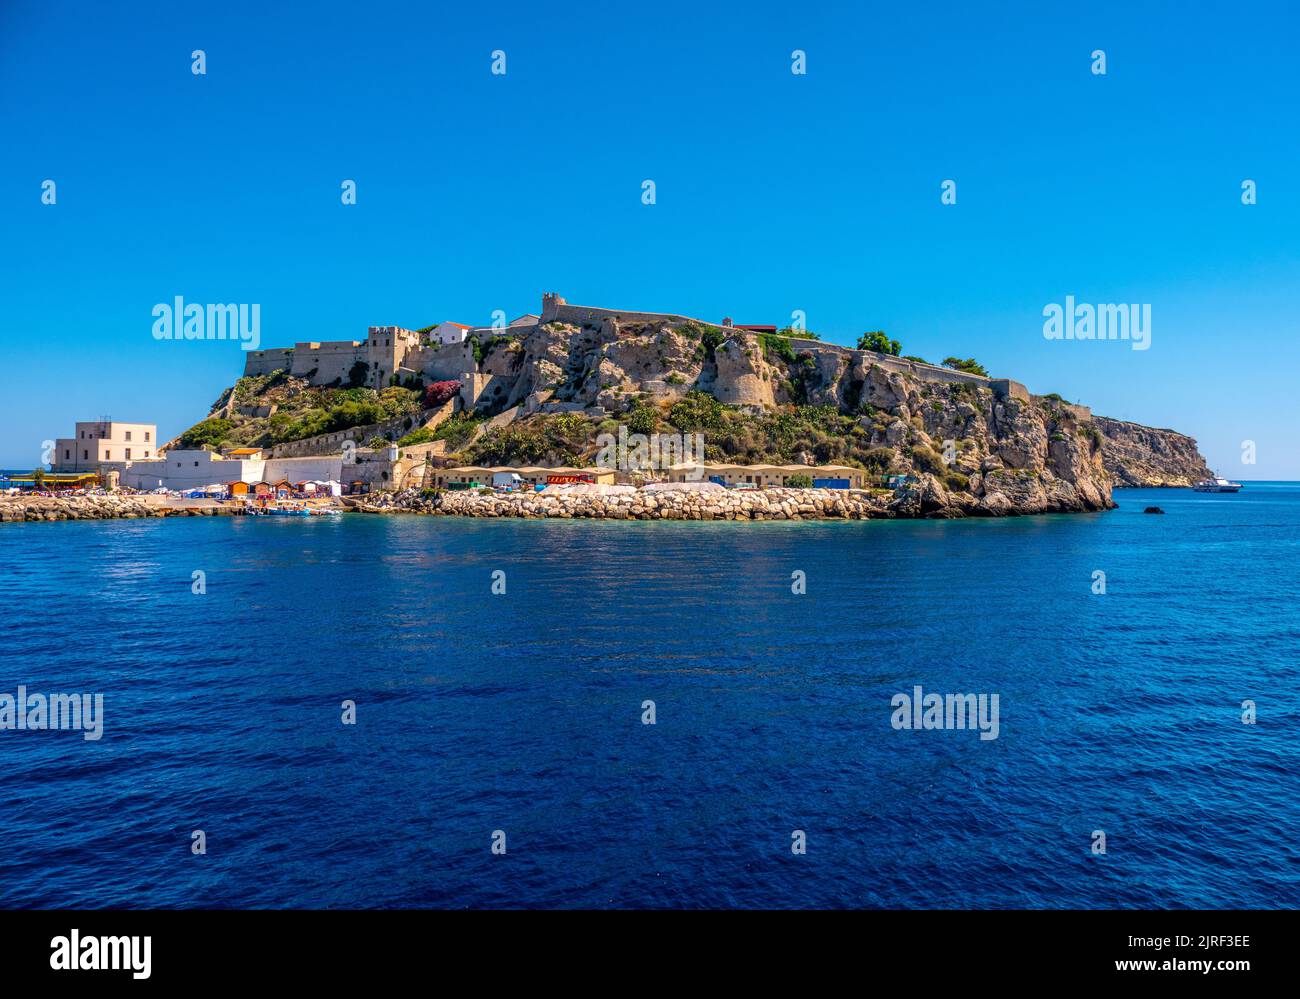 Isole Tremiti island of San Nicola in Gargano Apulia - Italy Stock Photo